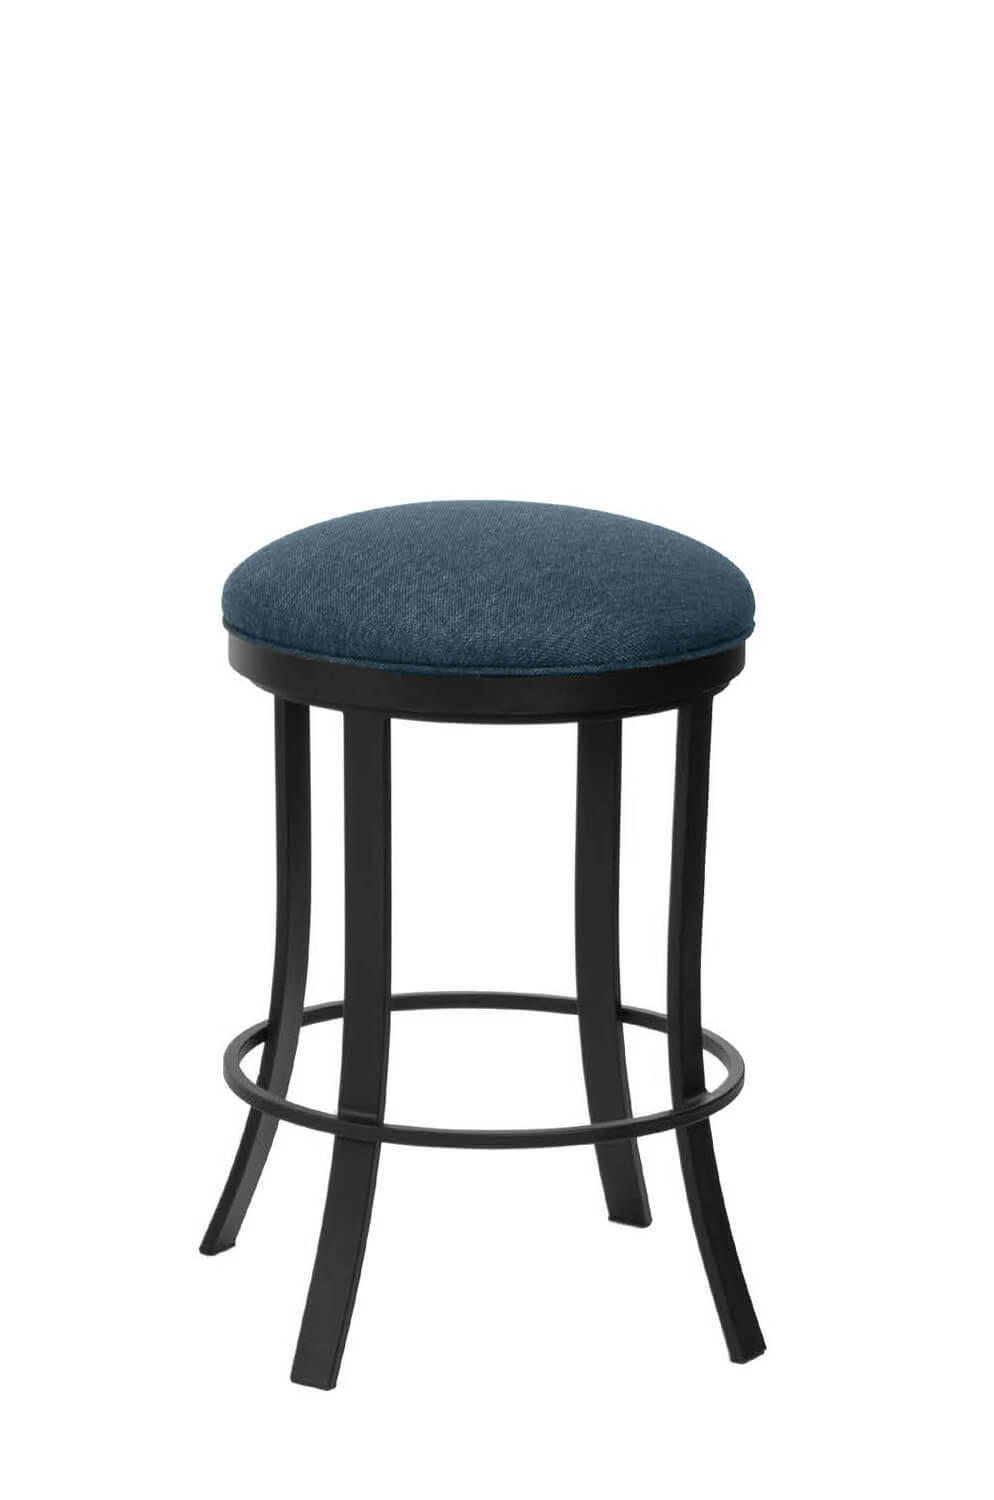 https://barstoolcomforts.com/wp-content/uploads/2018/08/wesley-allen-bali-backless-swivel-bar-stool-in-black-metal-finish-and-blue-seat-cushion.jpg